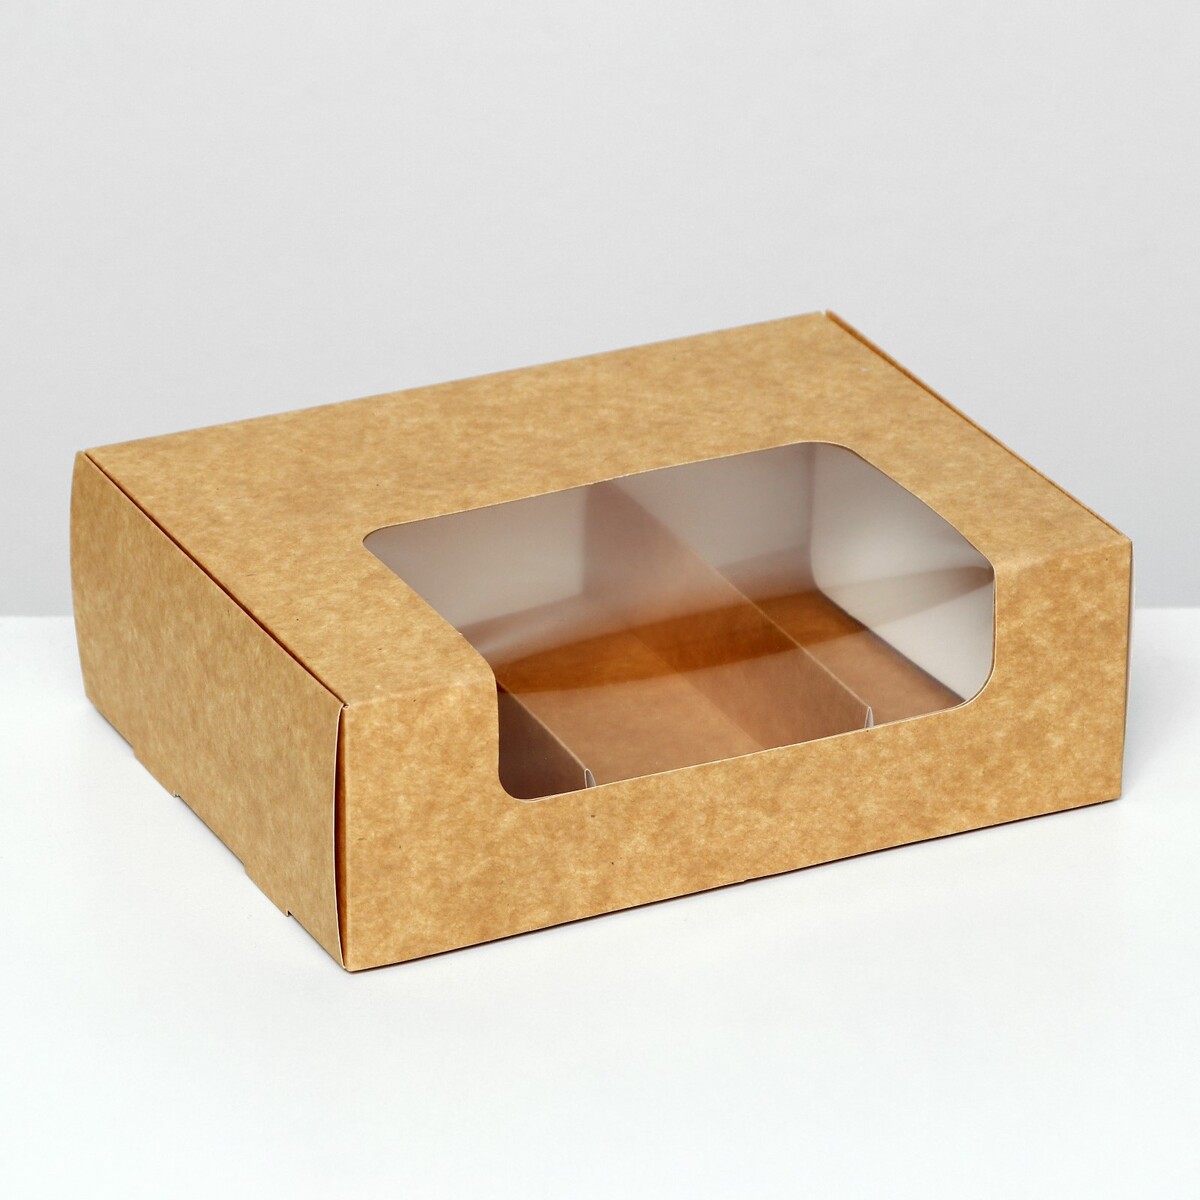 Коробка складная, под 3 эклера, крафт, 20 x 15 x 6 см коробка складная под 5 конфет крафт 5 х 22 х 3 5 см